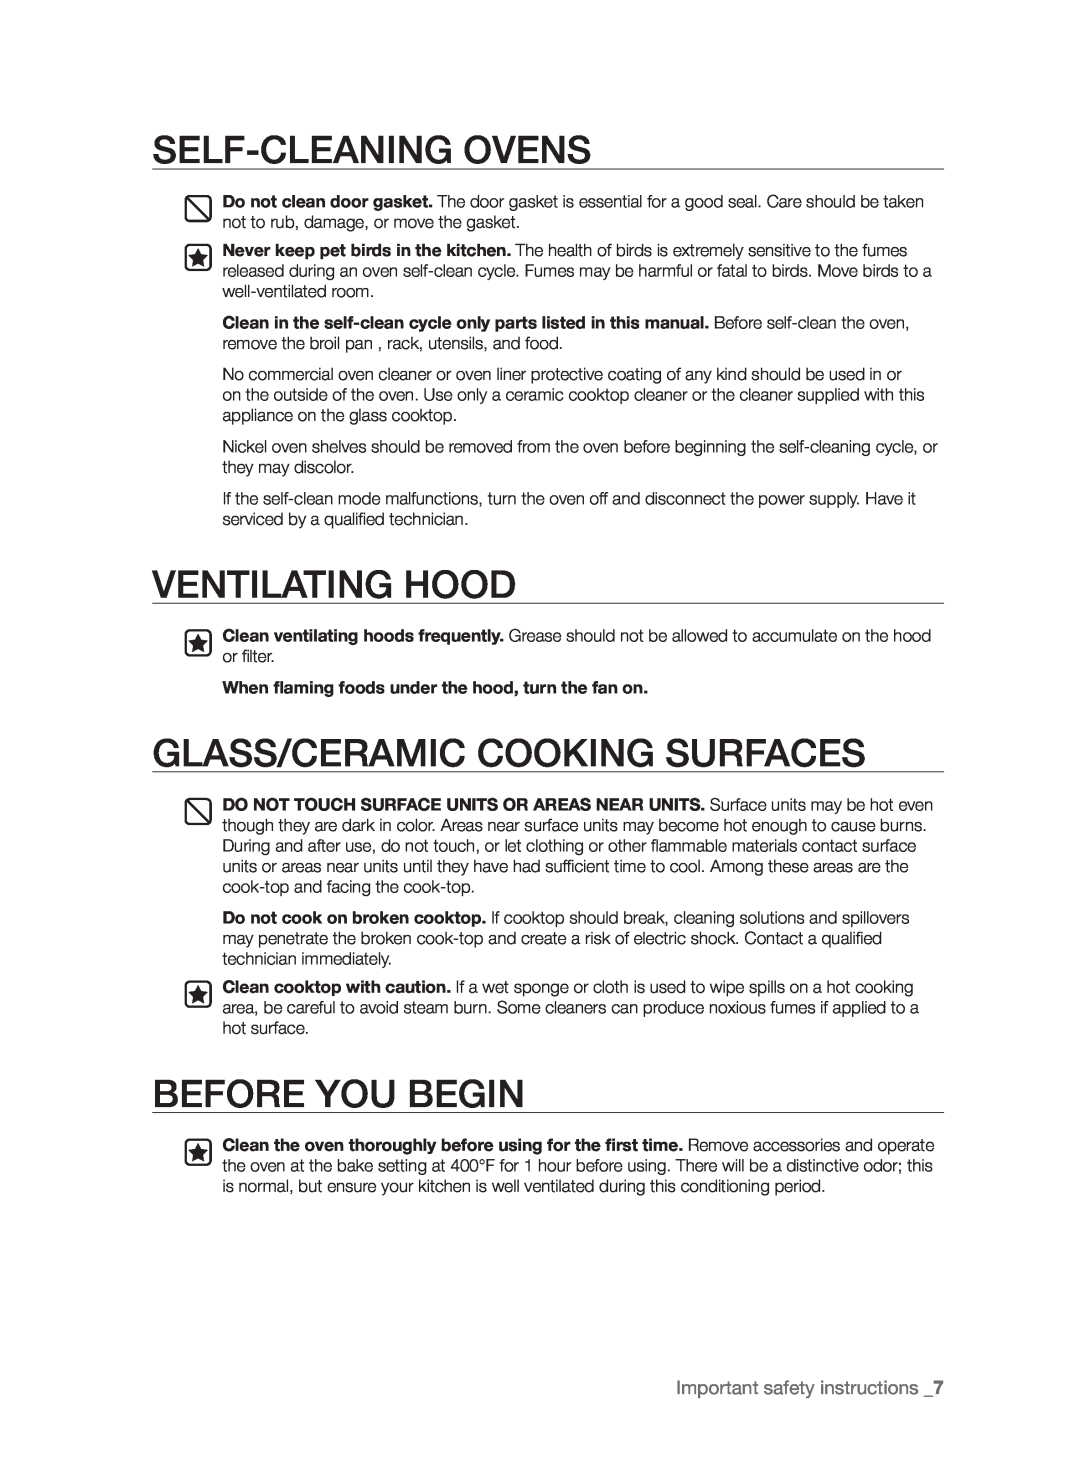 Samsung FTQ352IWB, FTQ352IWW Self-Cleaningovens, Ventilating Hood, Glass/Ceramic Cooking Surfaces, Before you begin 